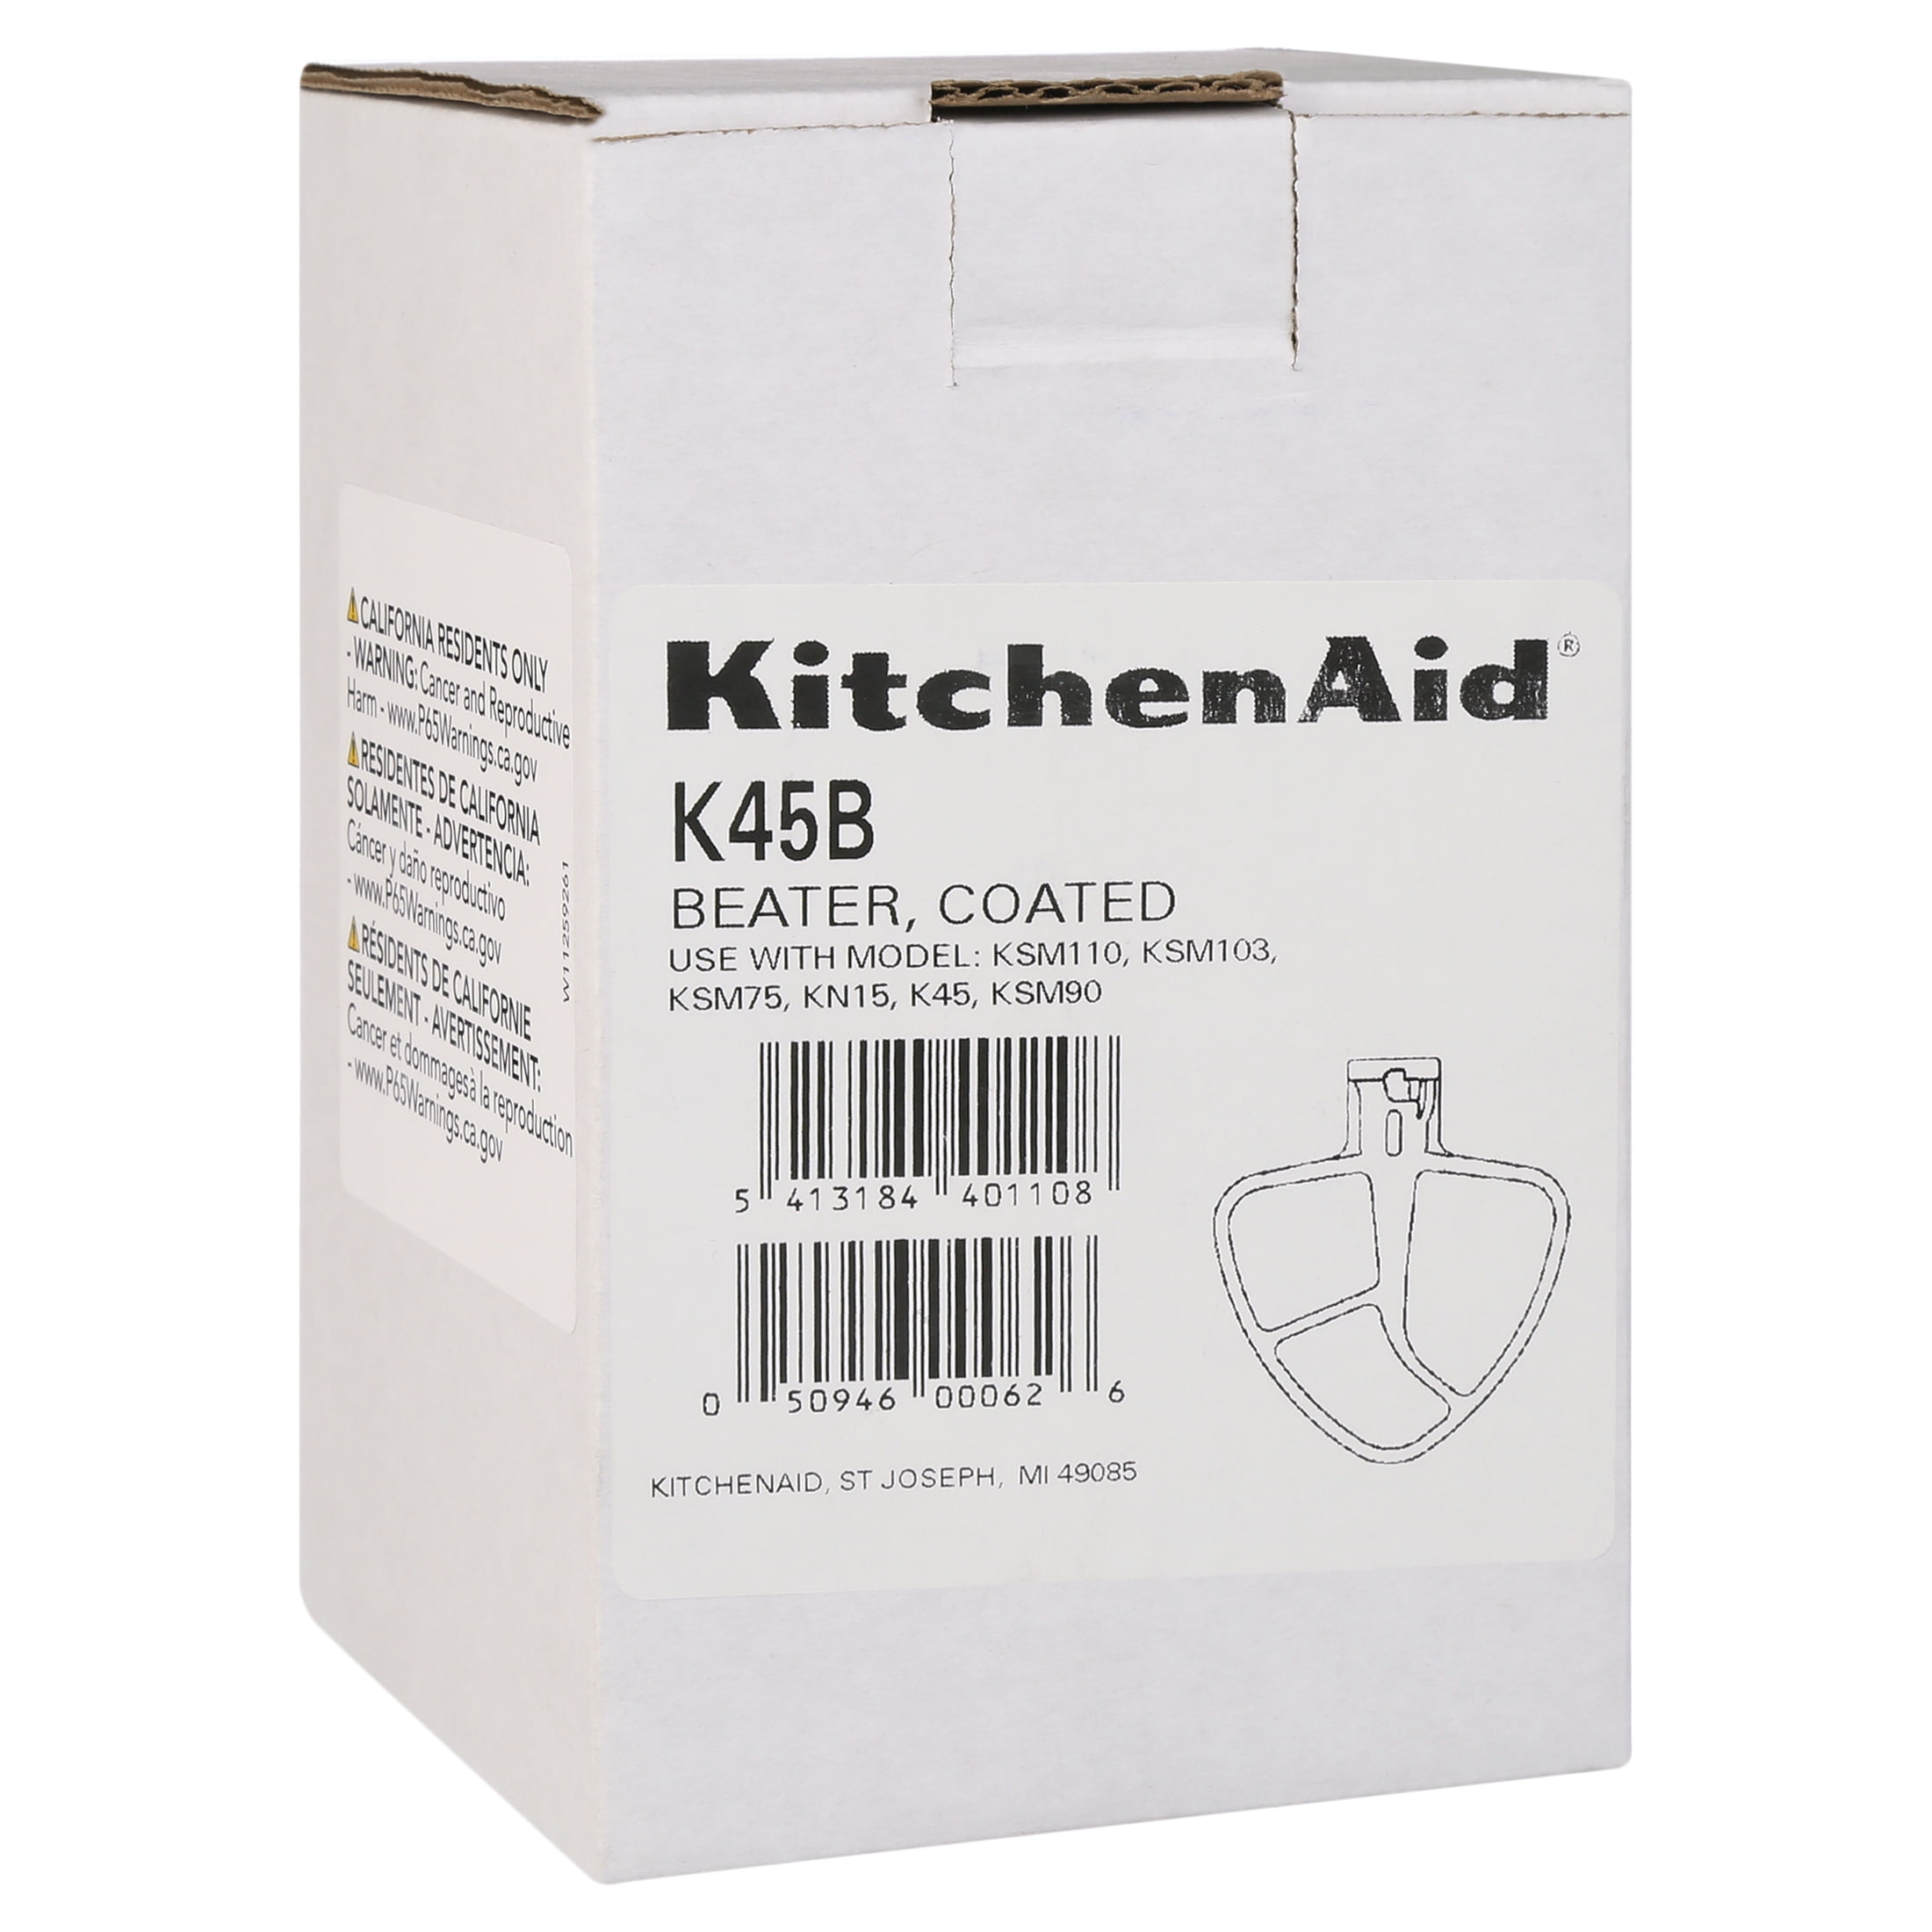 KitchenAid K45B Coated Flat Beater, White, 4.5 Qt